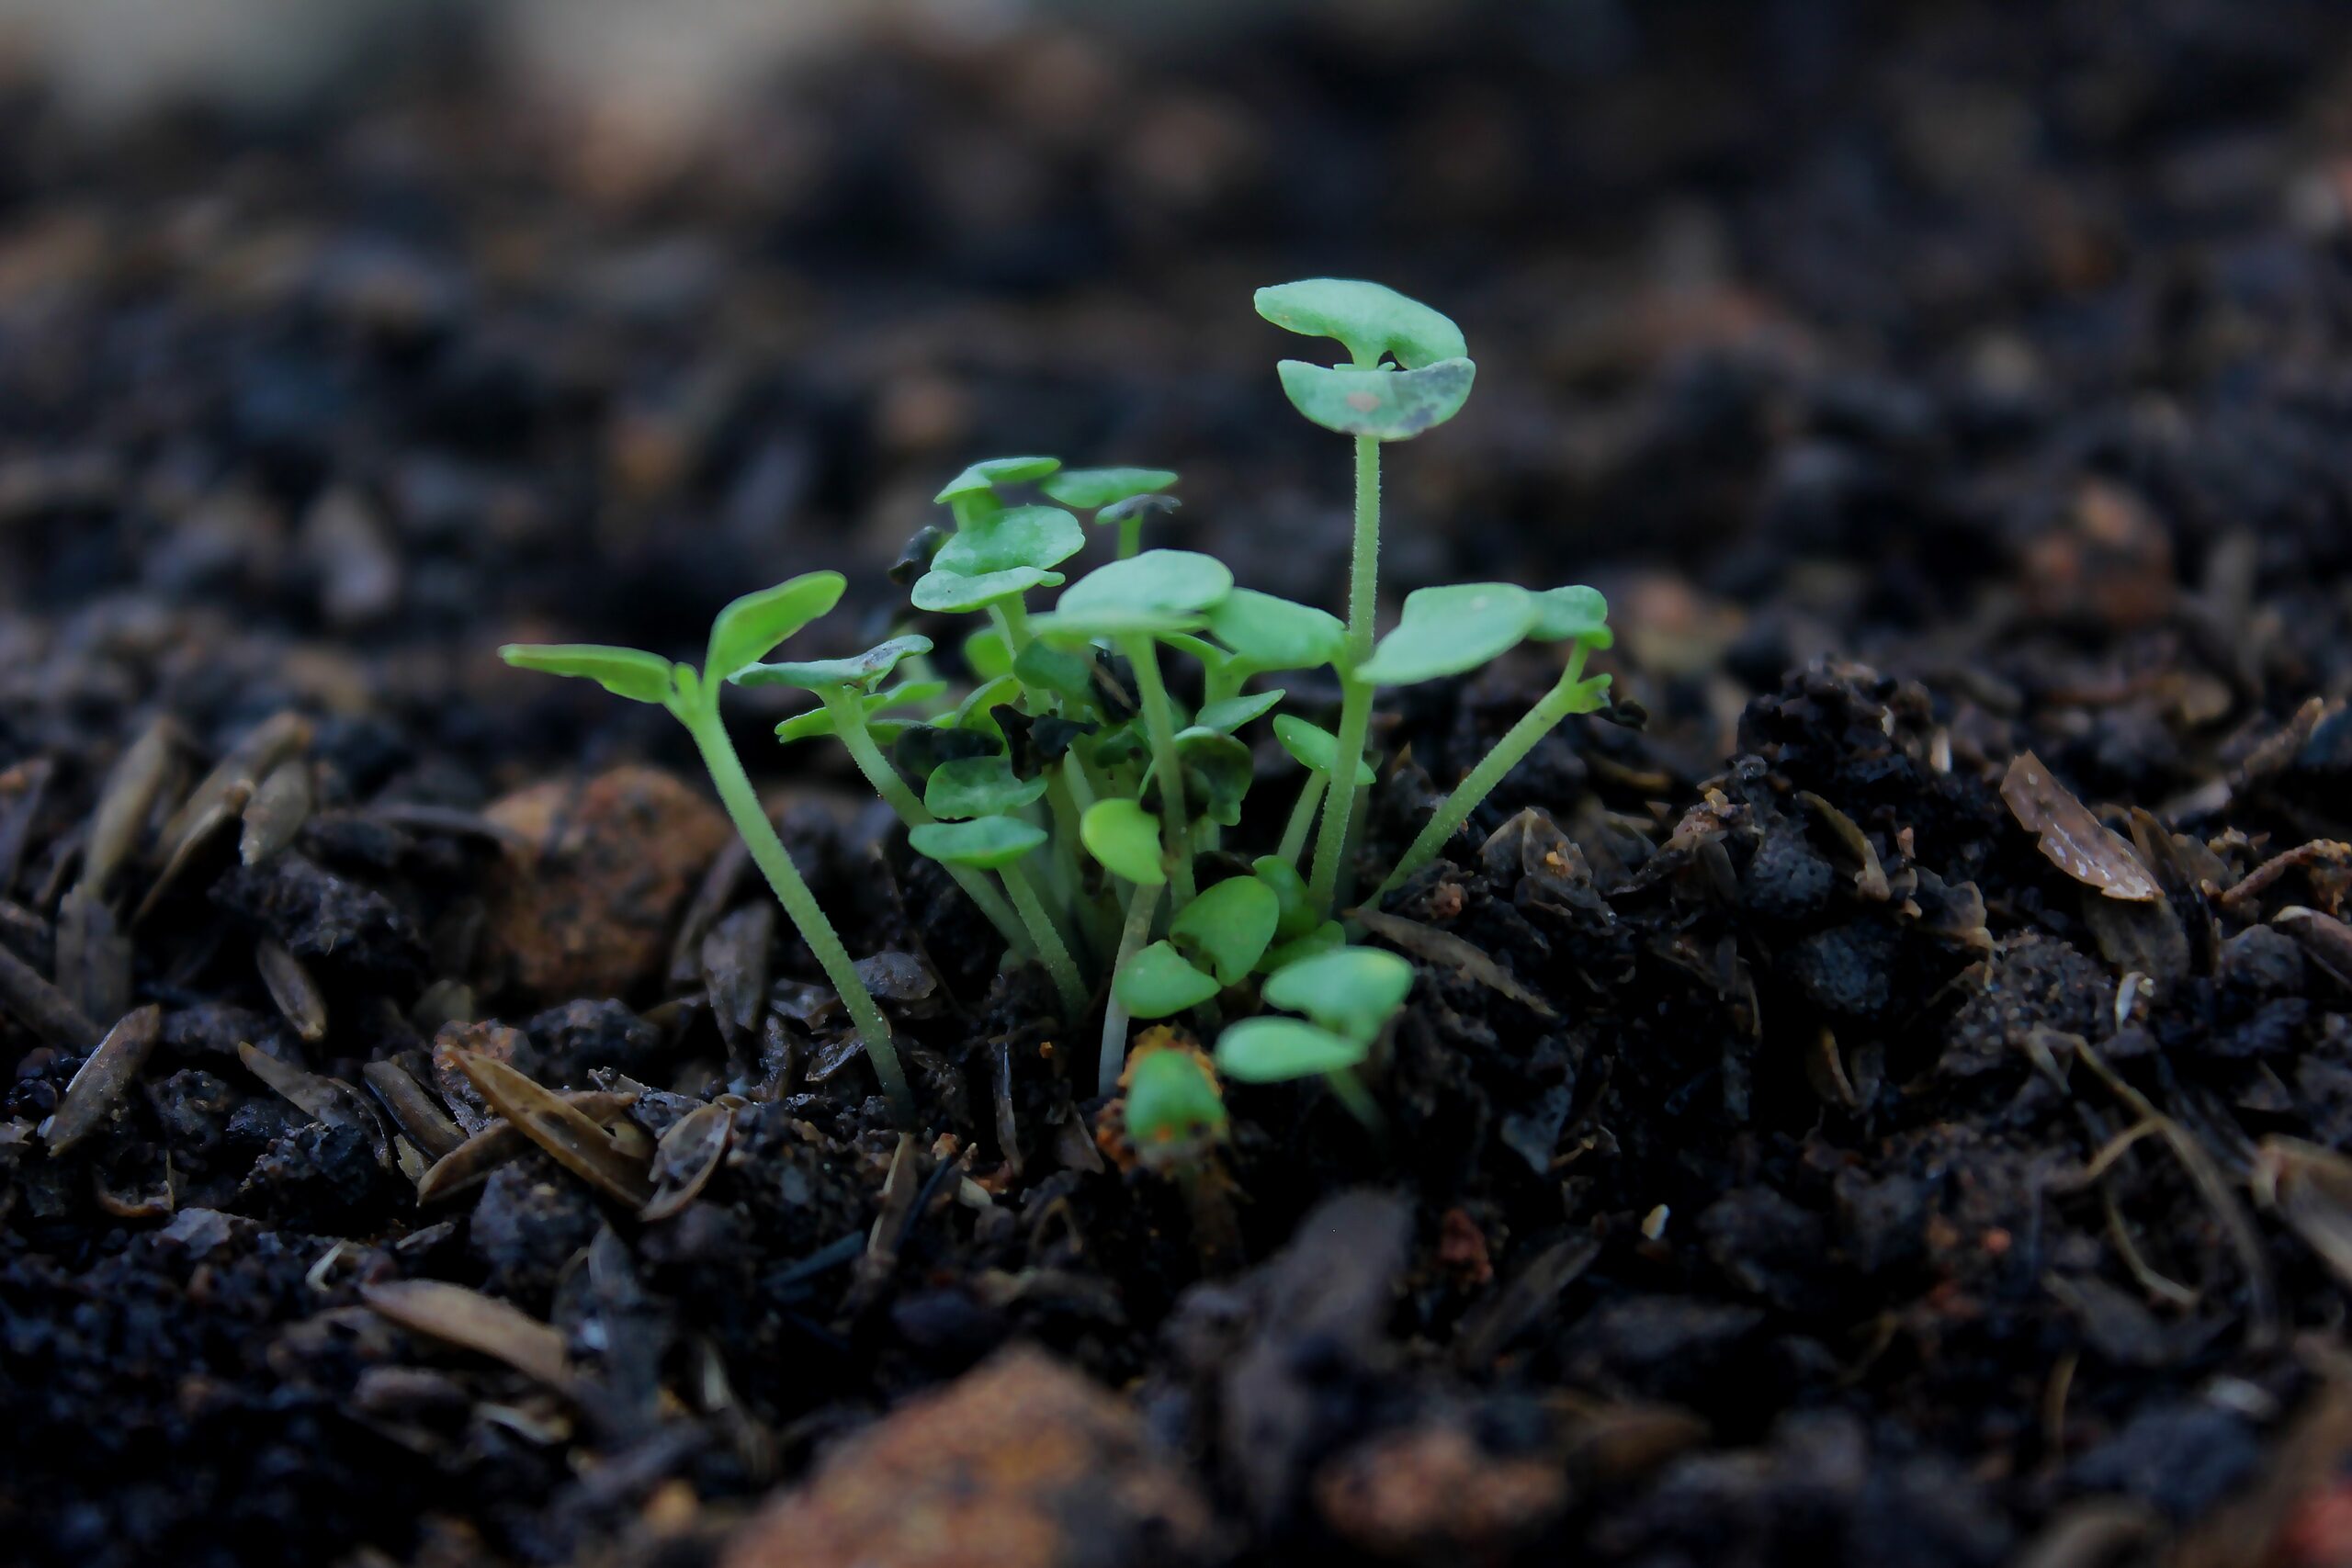 seeding and harvesting green innovation